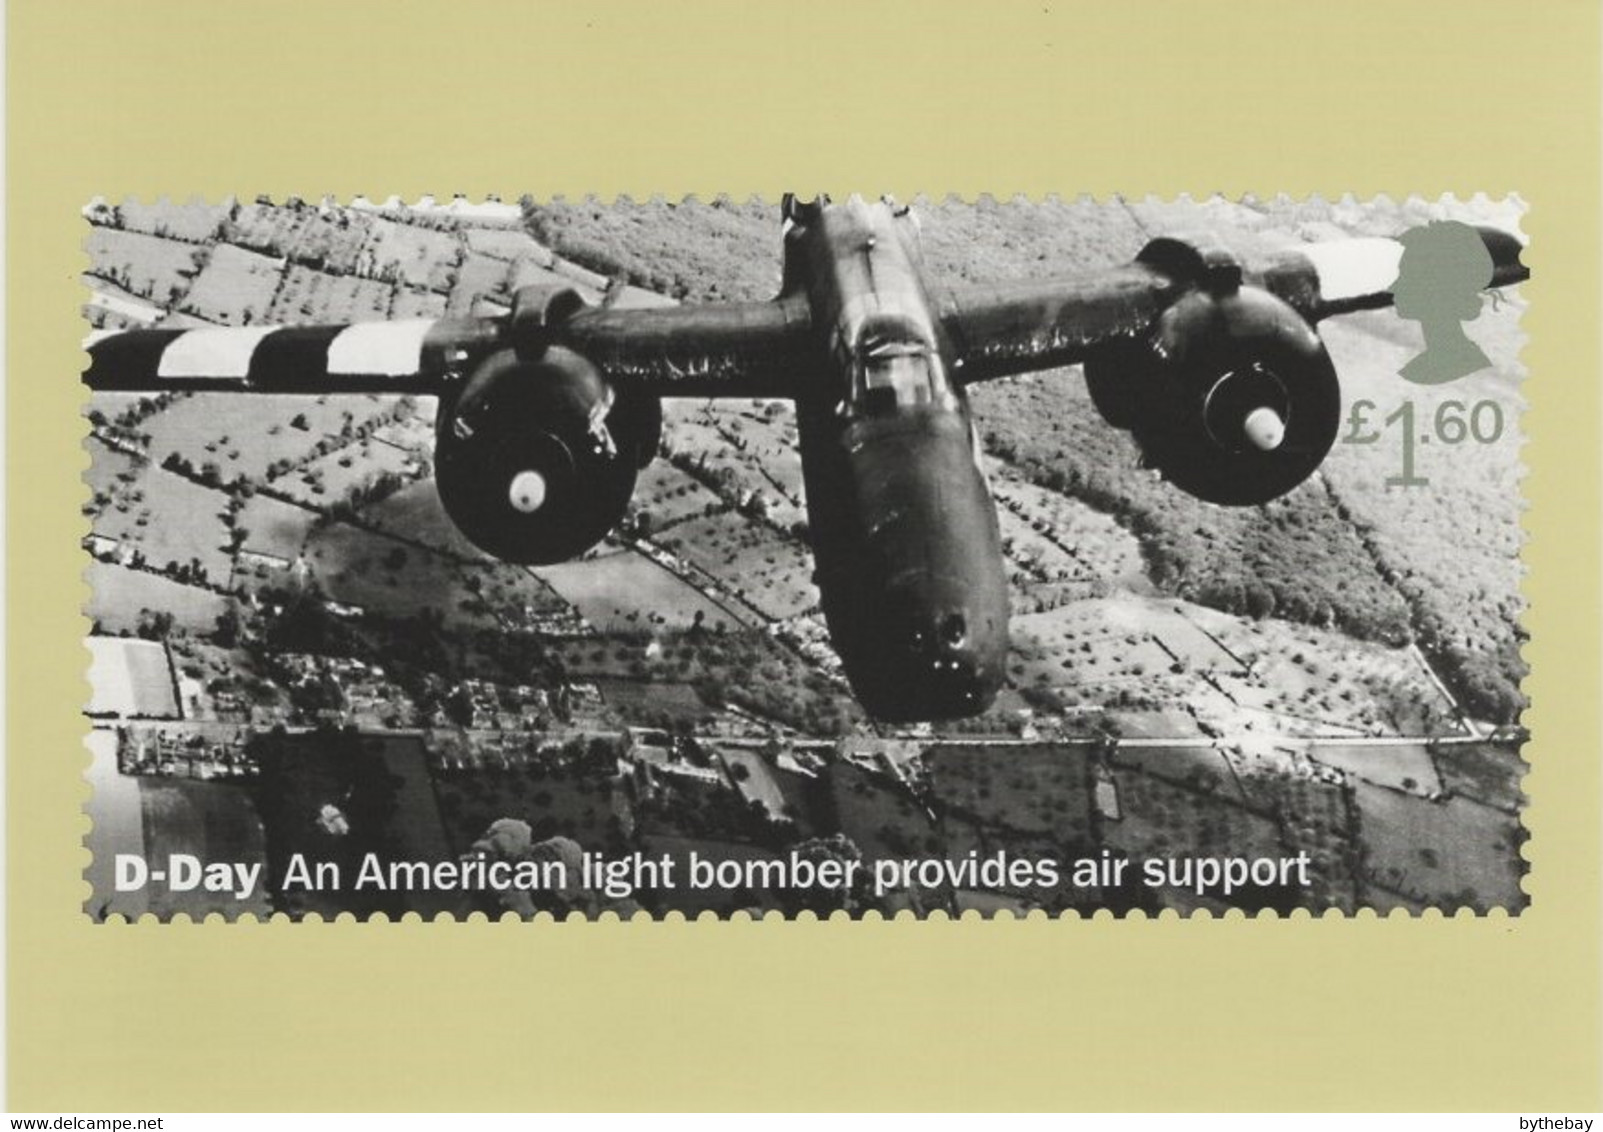 Great Britain 2019 PHQ Card Sc 3857 1.60pd D-Day America Light Bomber - PHQ Karten